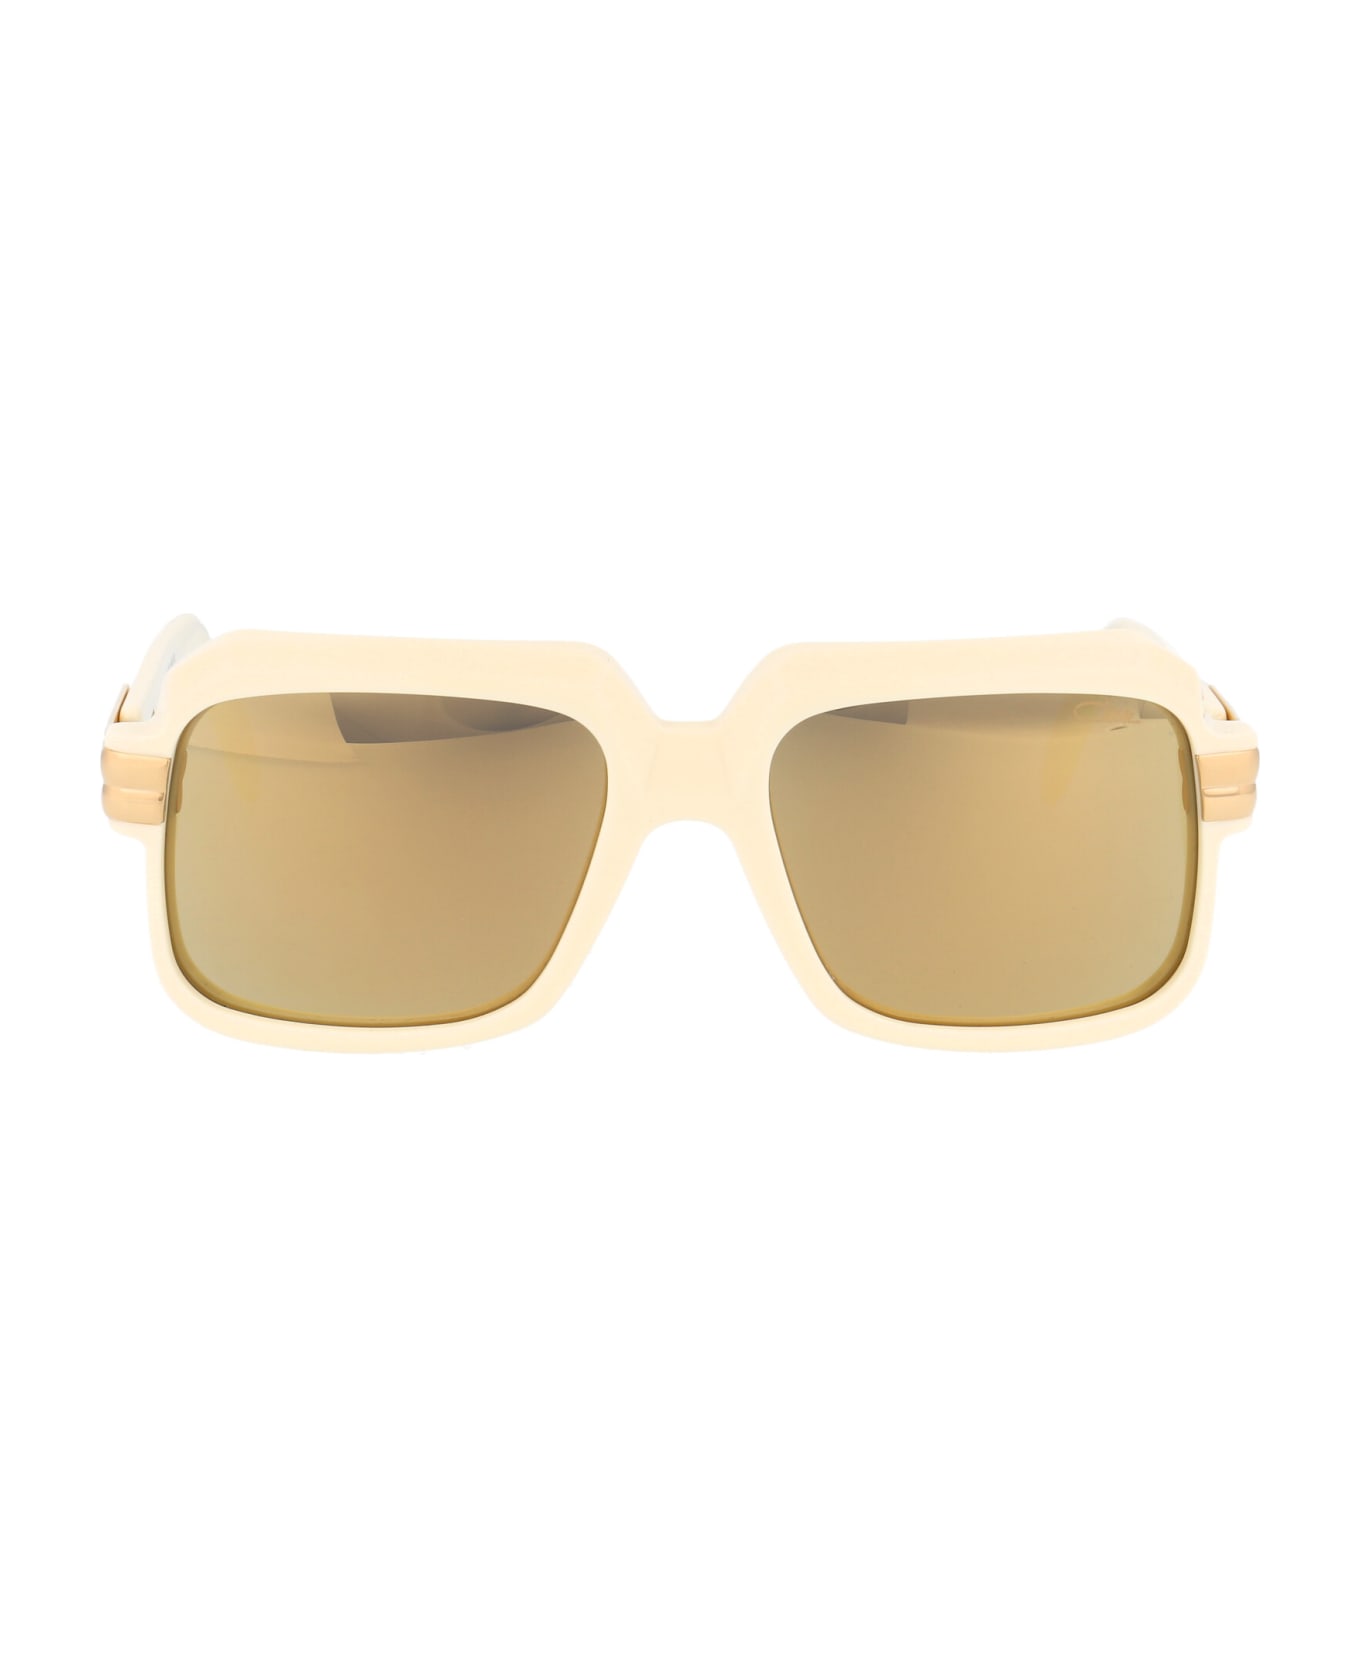 Cazal Mod. 607/3 Sunglasses - 007 IVORY サングラス